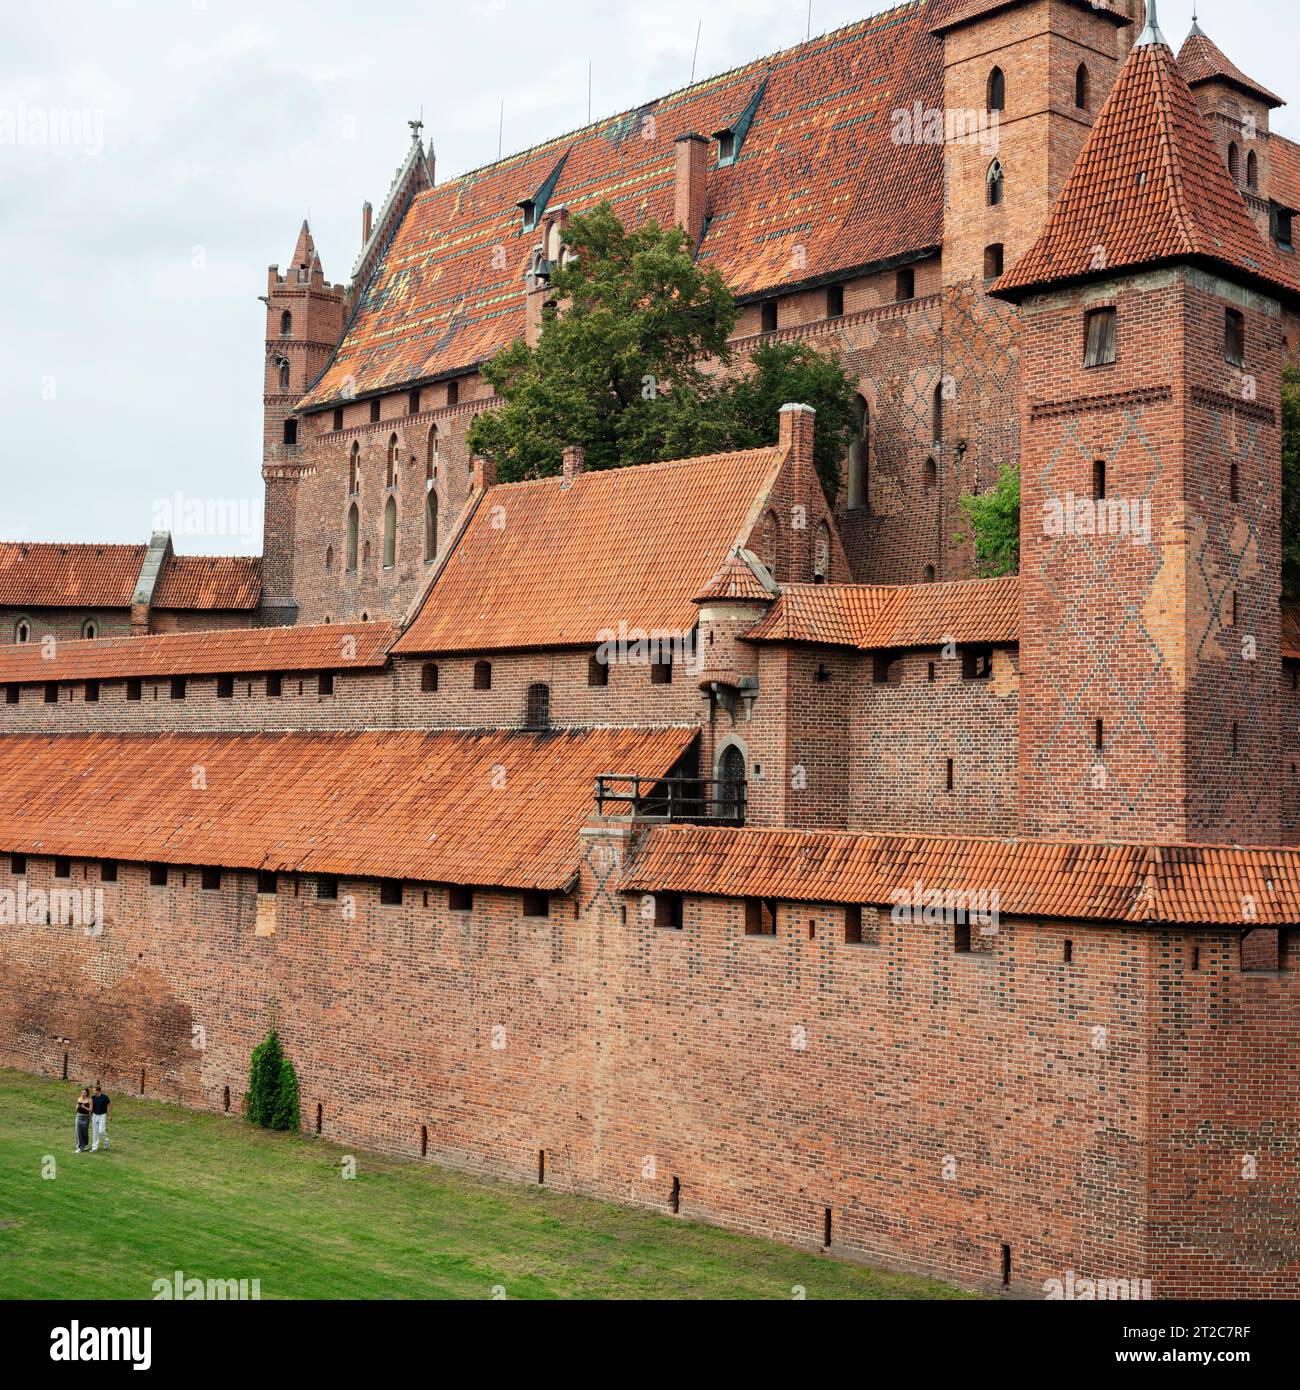 The 13th Century Teutonic Malbork Castle medieval building and UNESCO heritage site in Malbork, Poland, Europe, EU Stock Photo